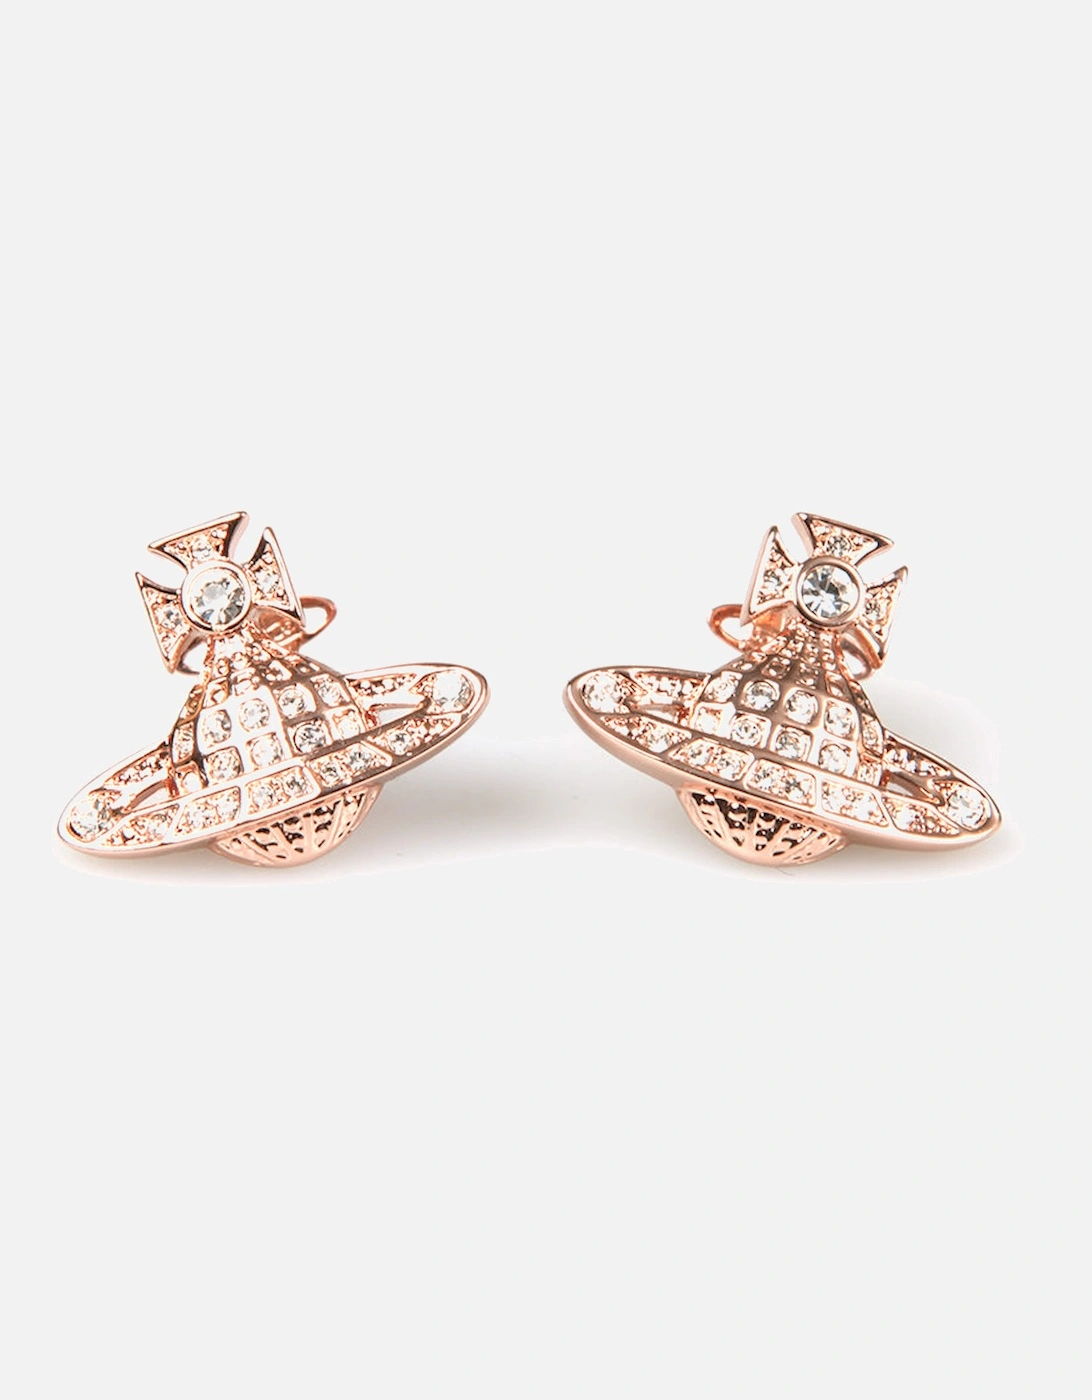 Minnie bas relief earrings